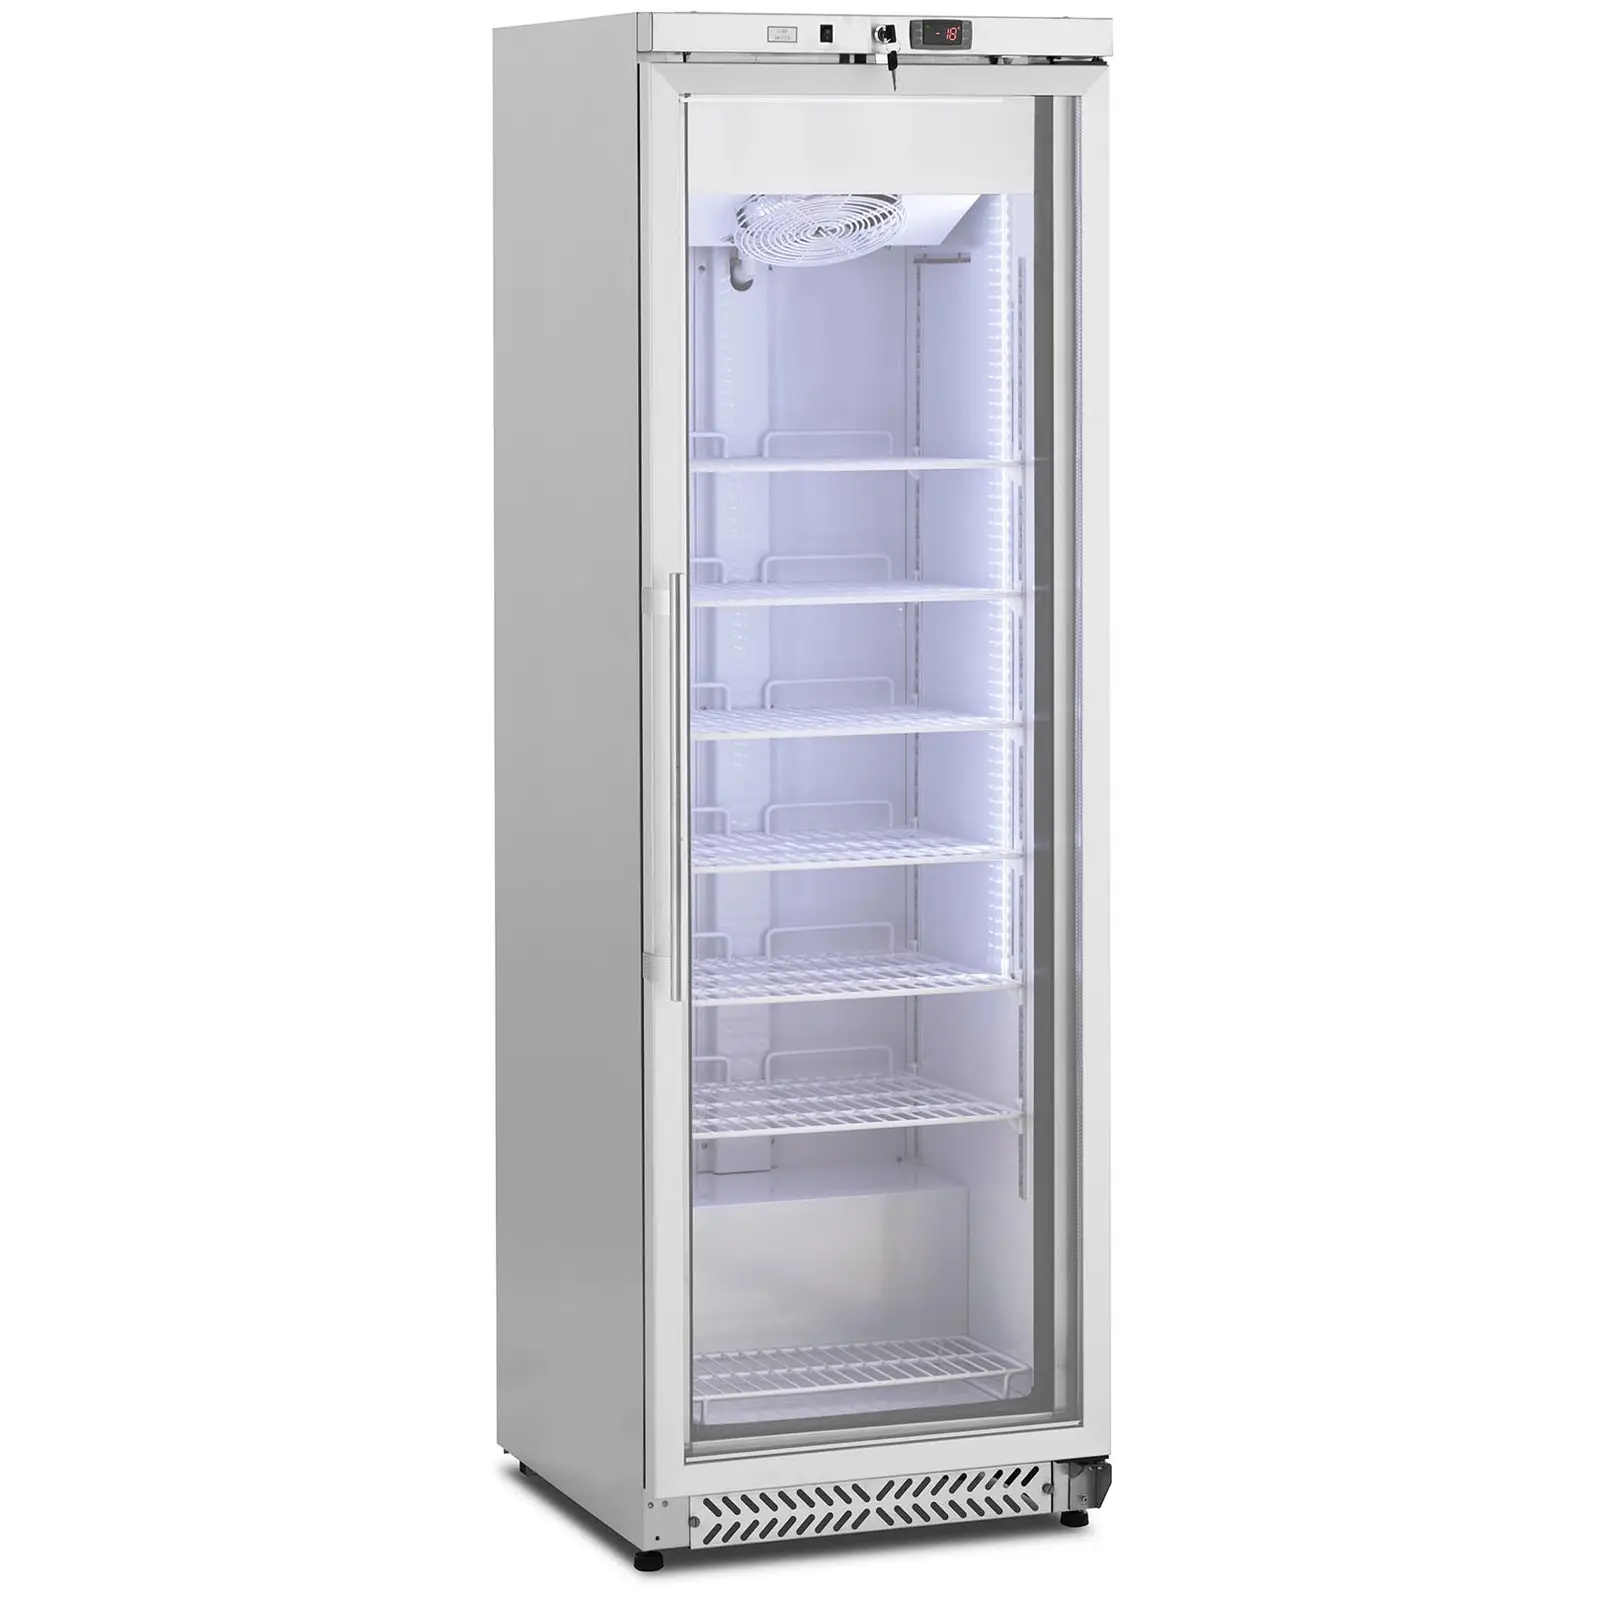 Freezer - 380 L - Royal Catering - glass door - Silver - refrigerant R290